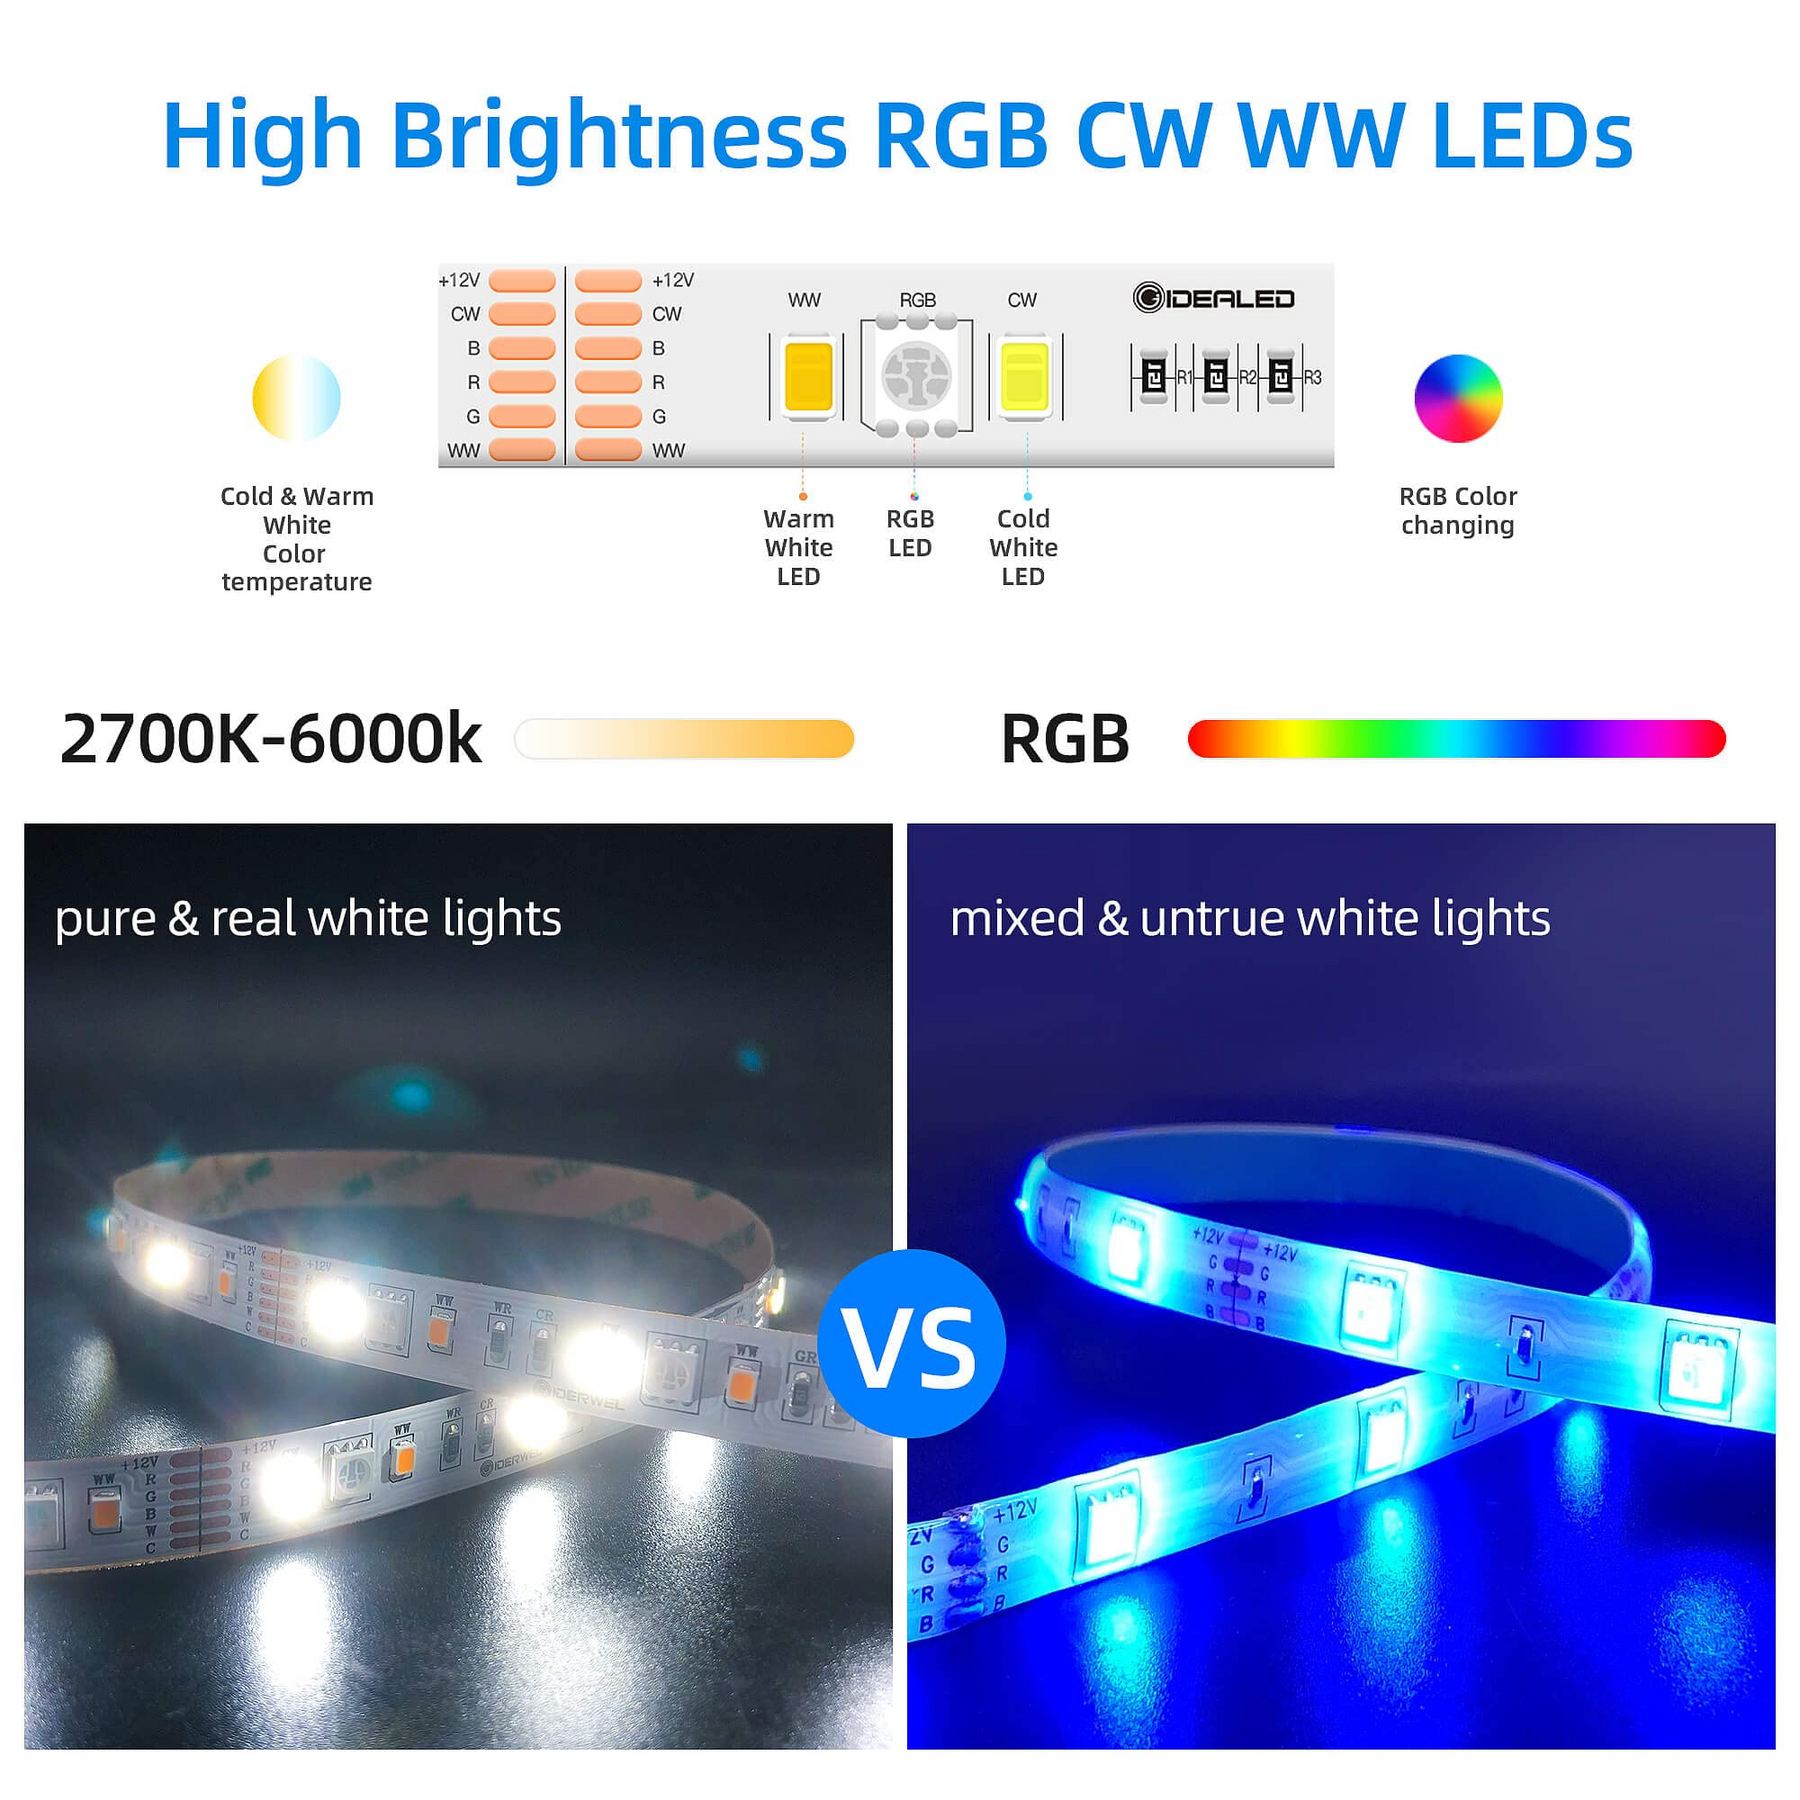 Smart ZigBee RGBCCT LED Strip Lights work with Philips